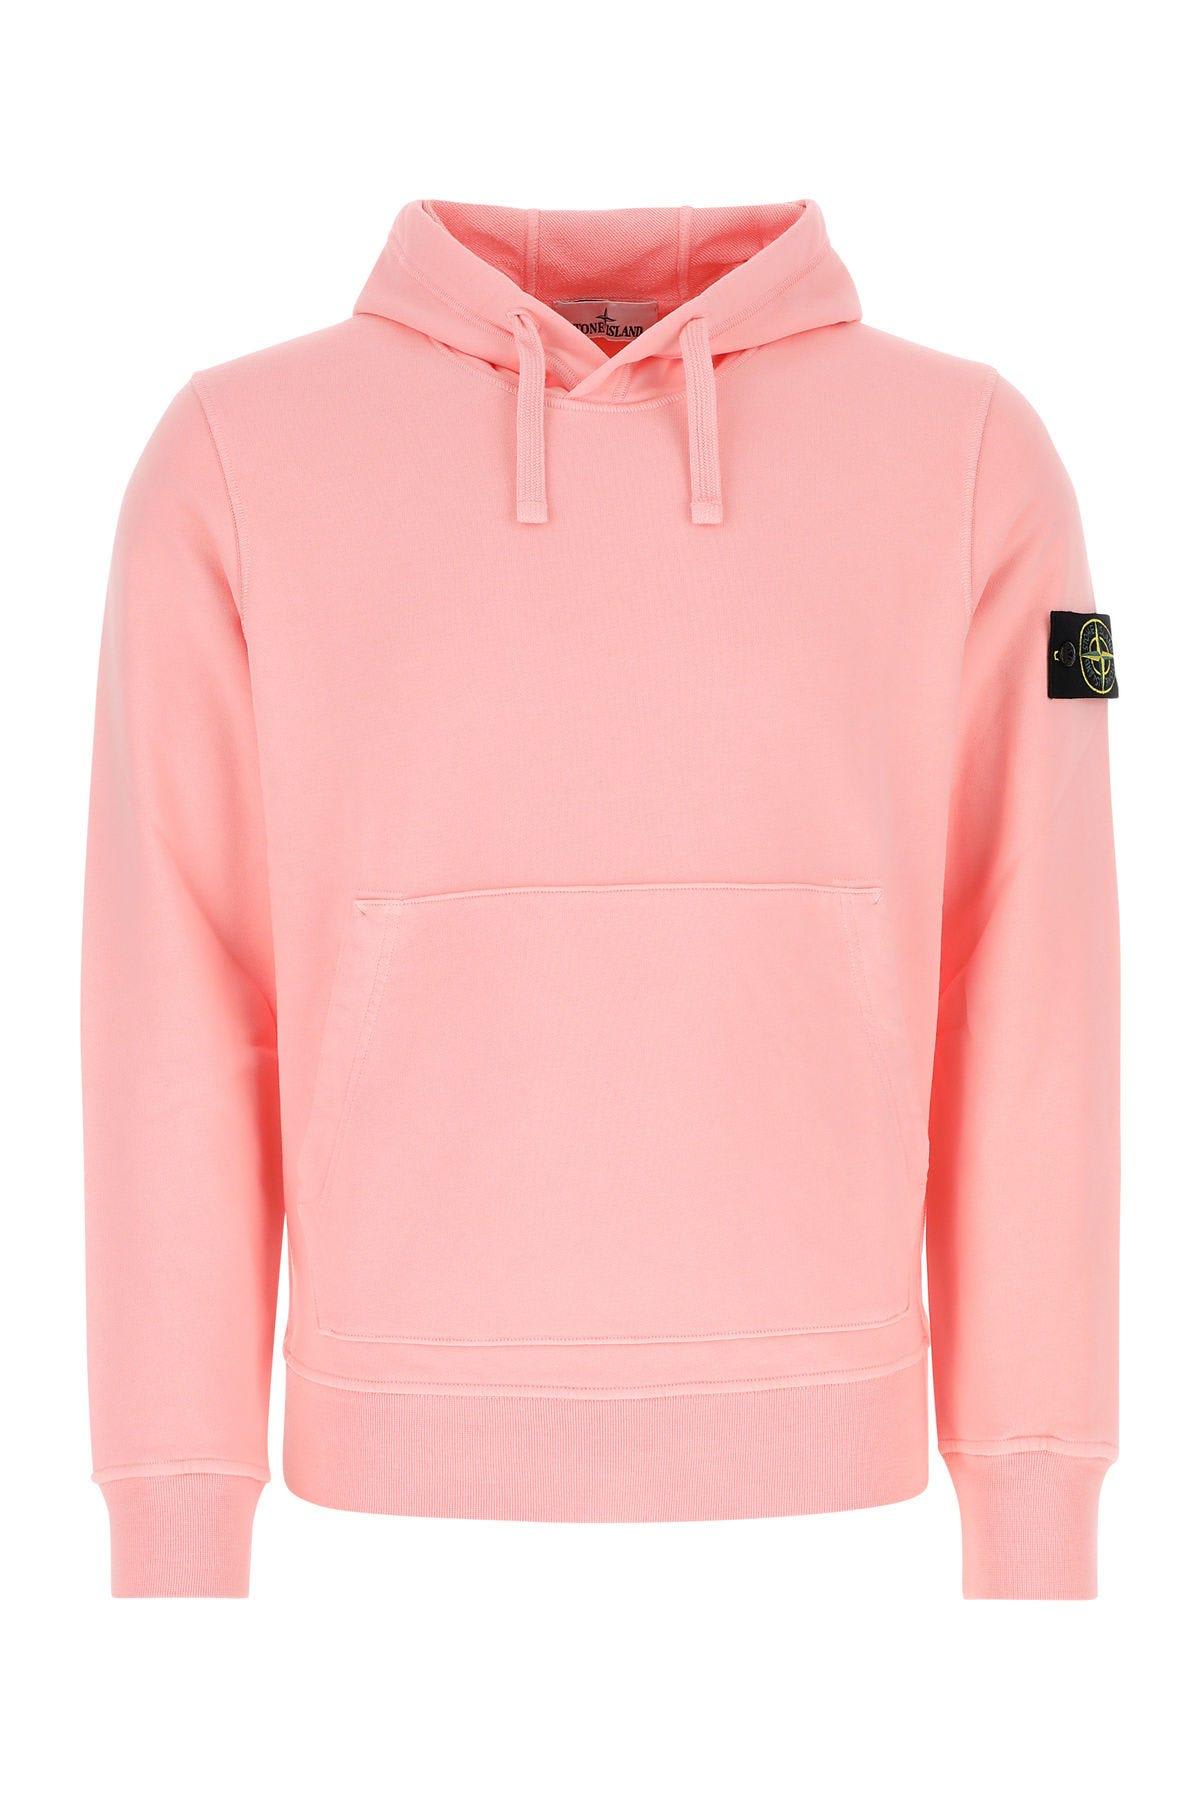 Stone Island Pink Cotton Sweatshirt